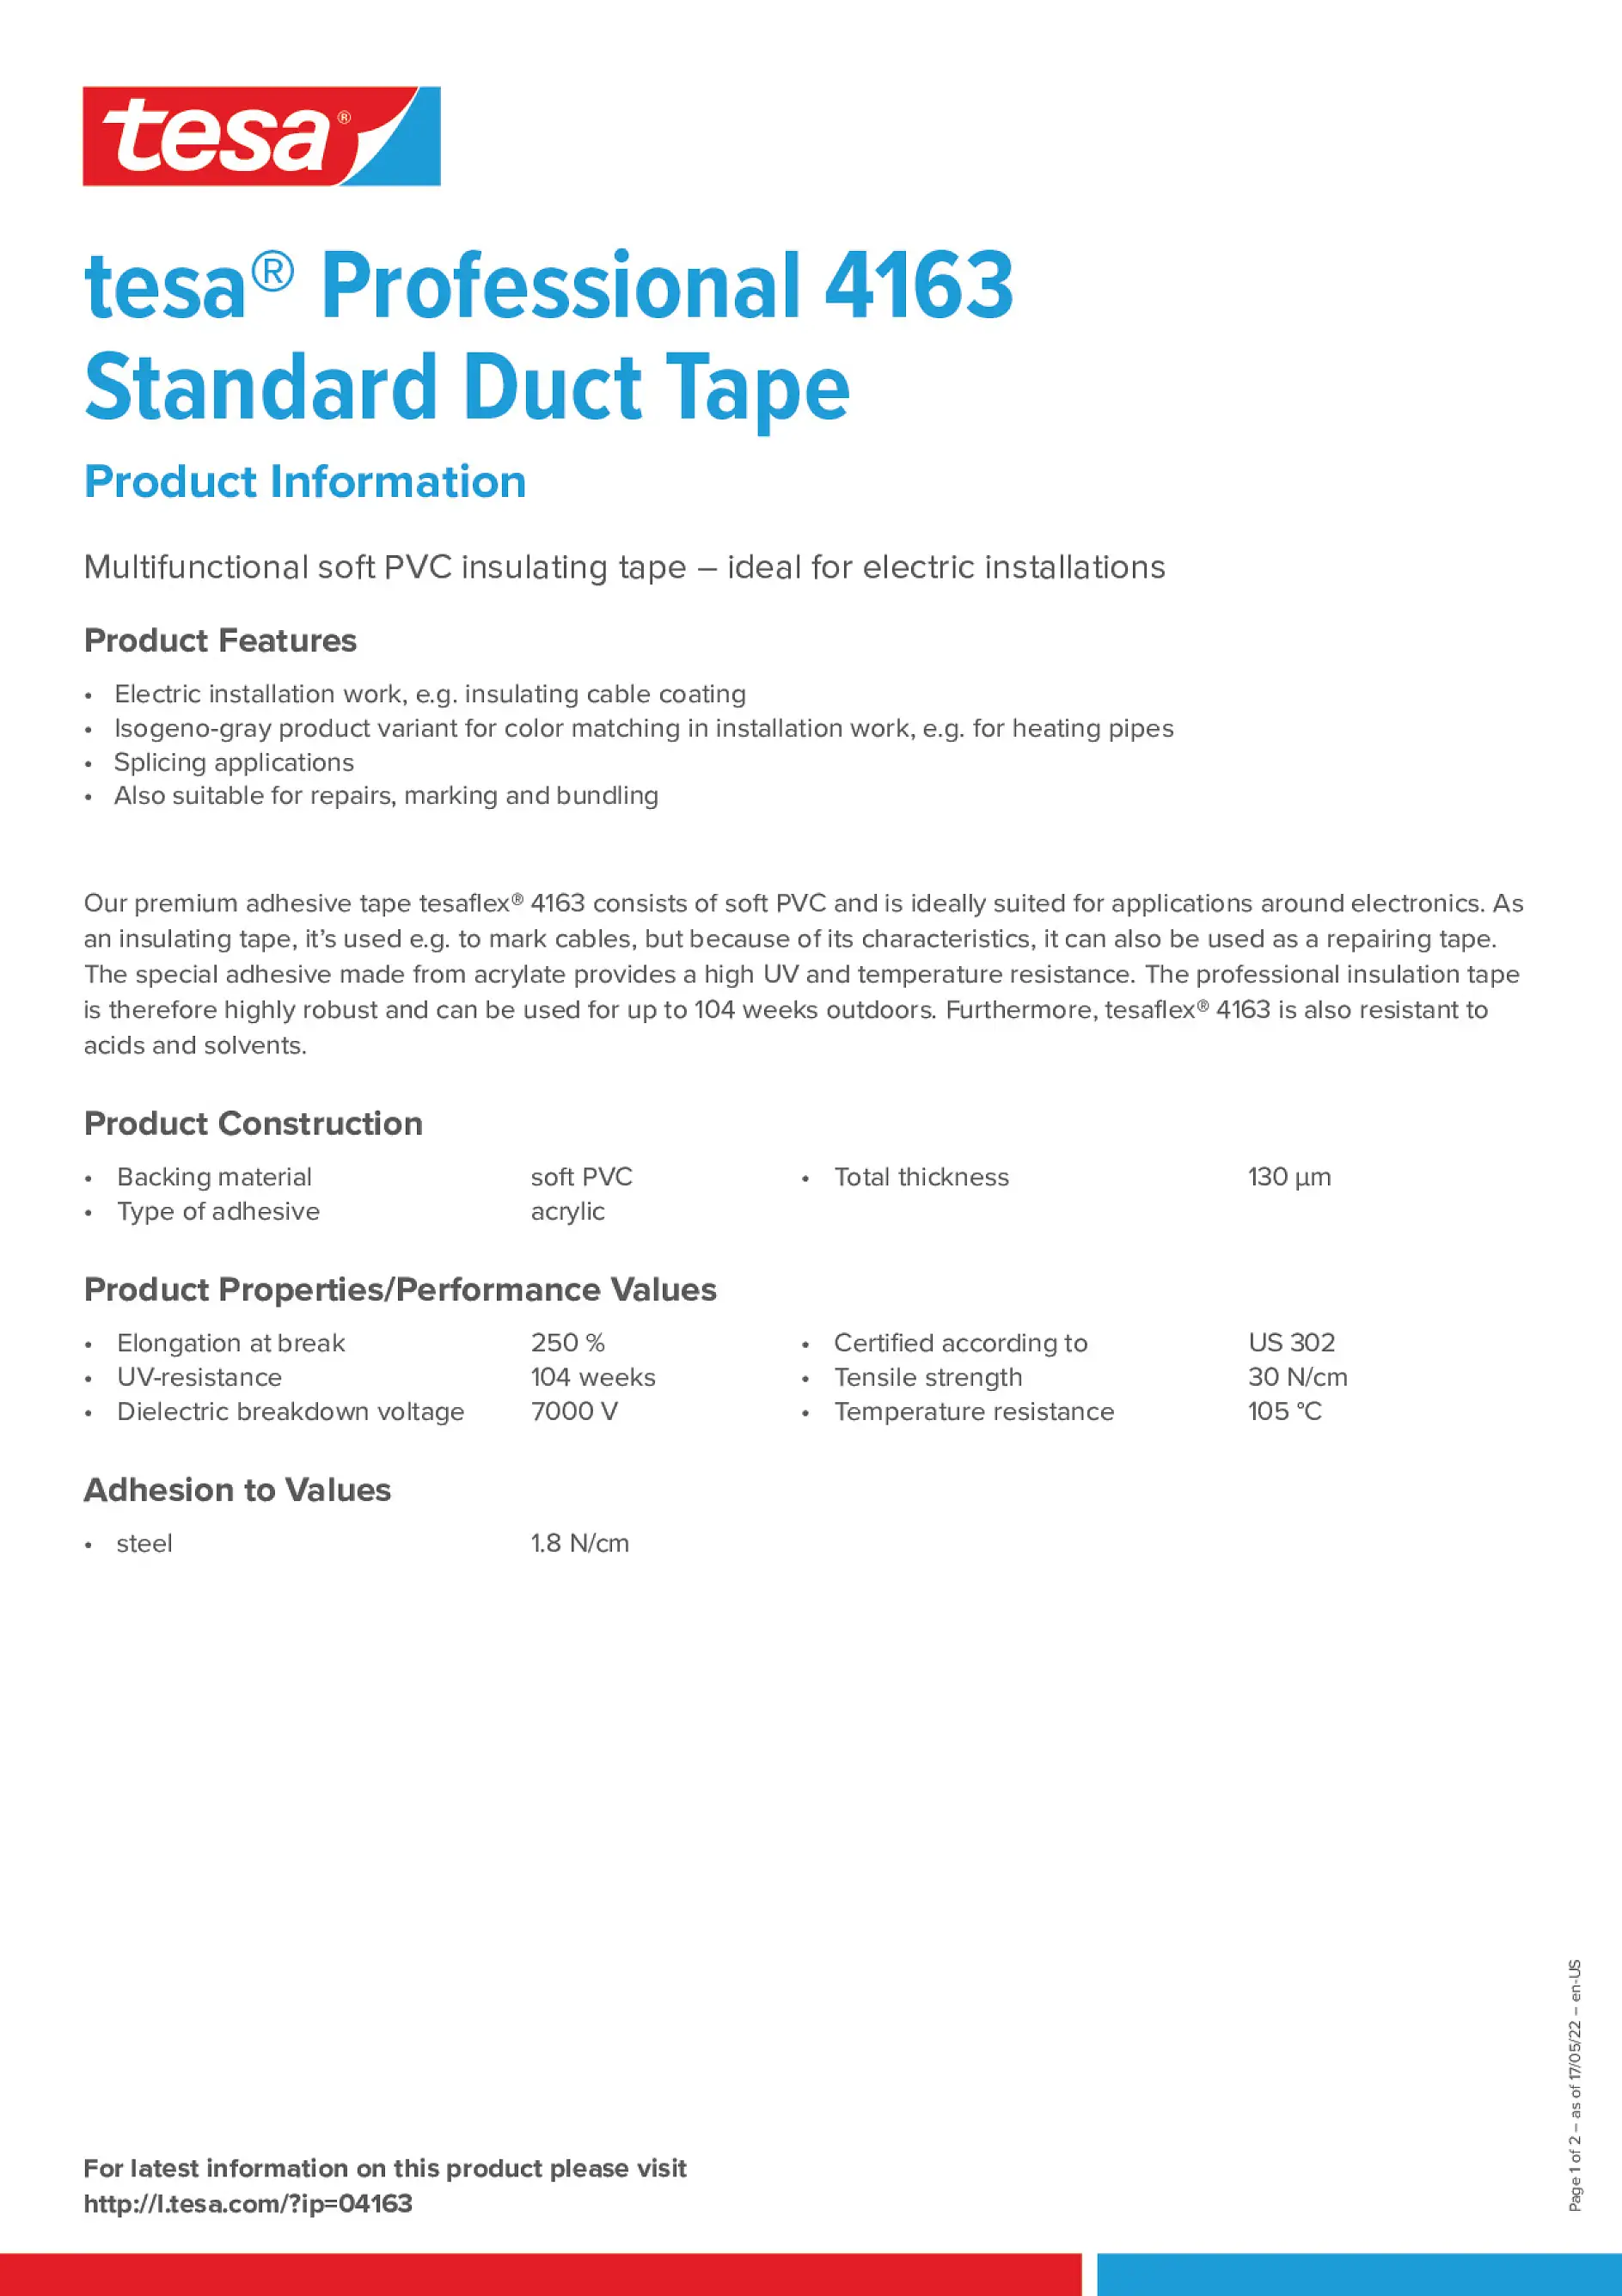 tesa_Professional_4163_Standard_Duct_Tape_cr_en-US